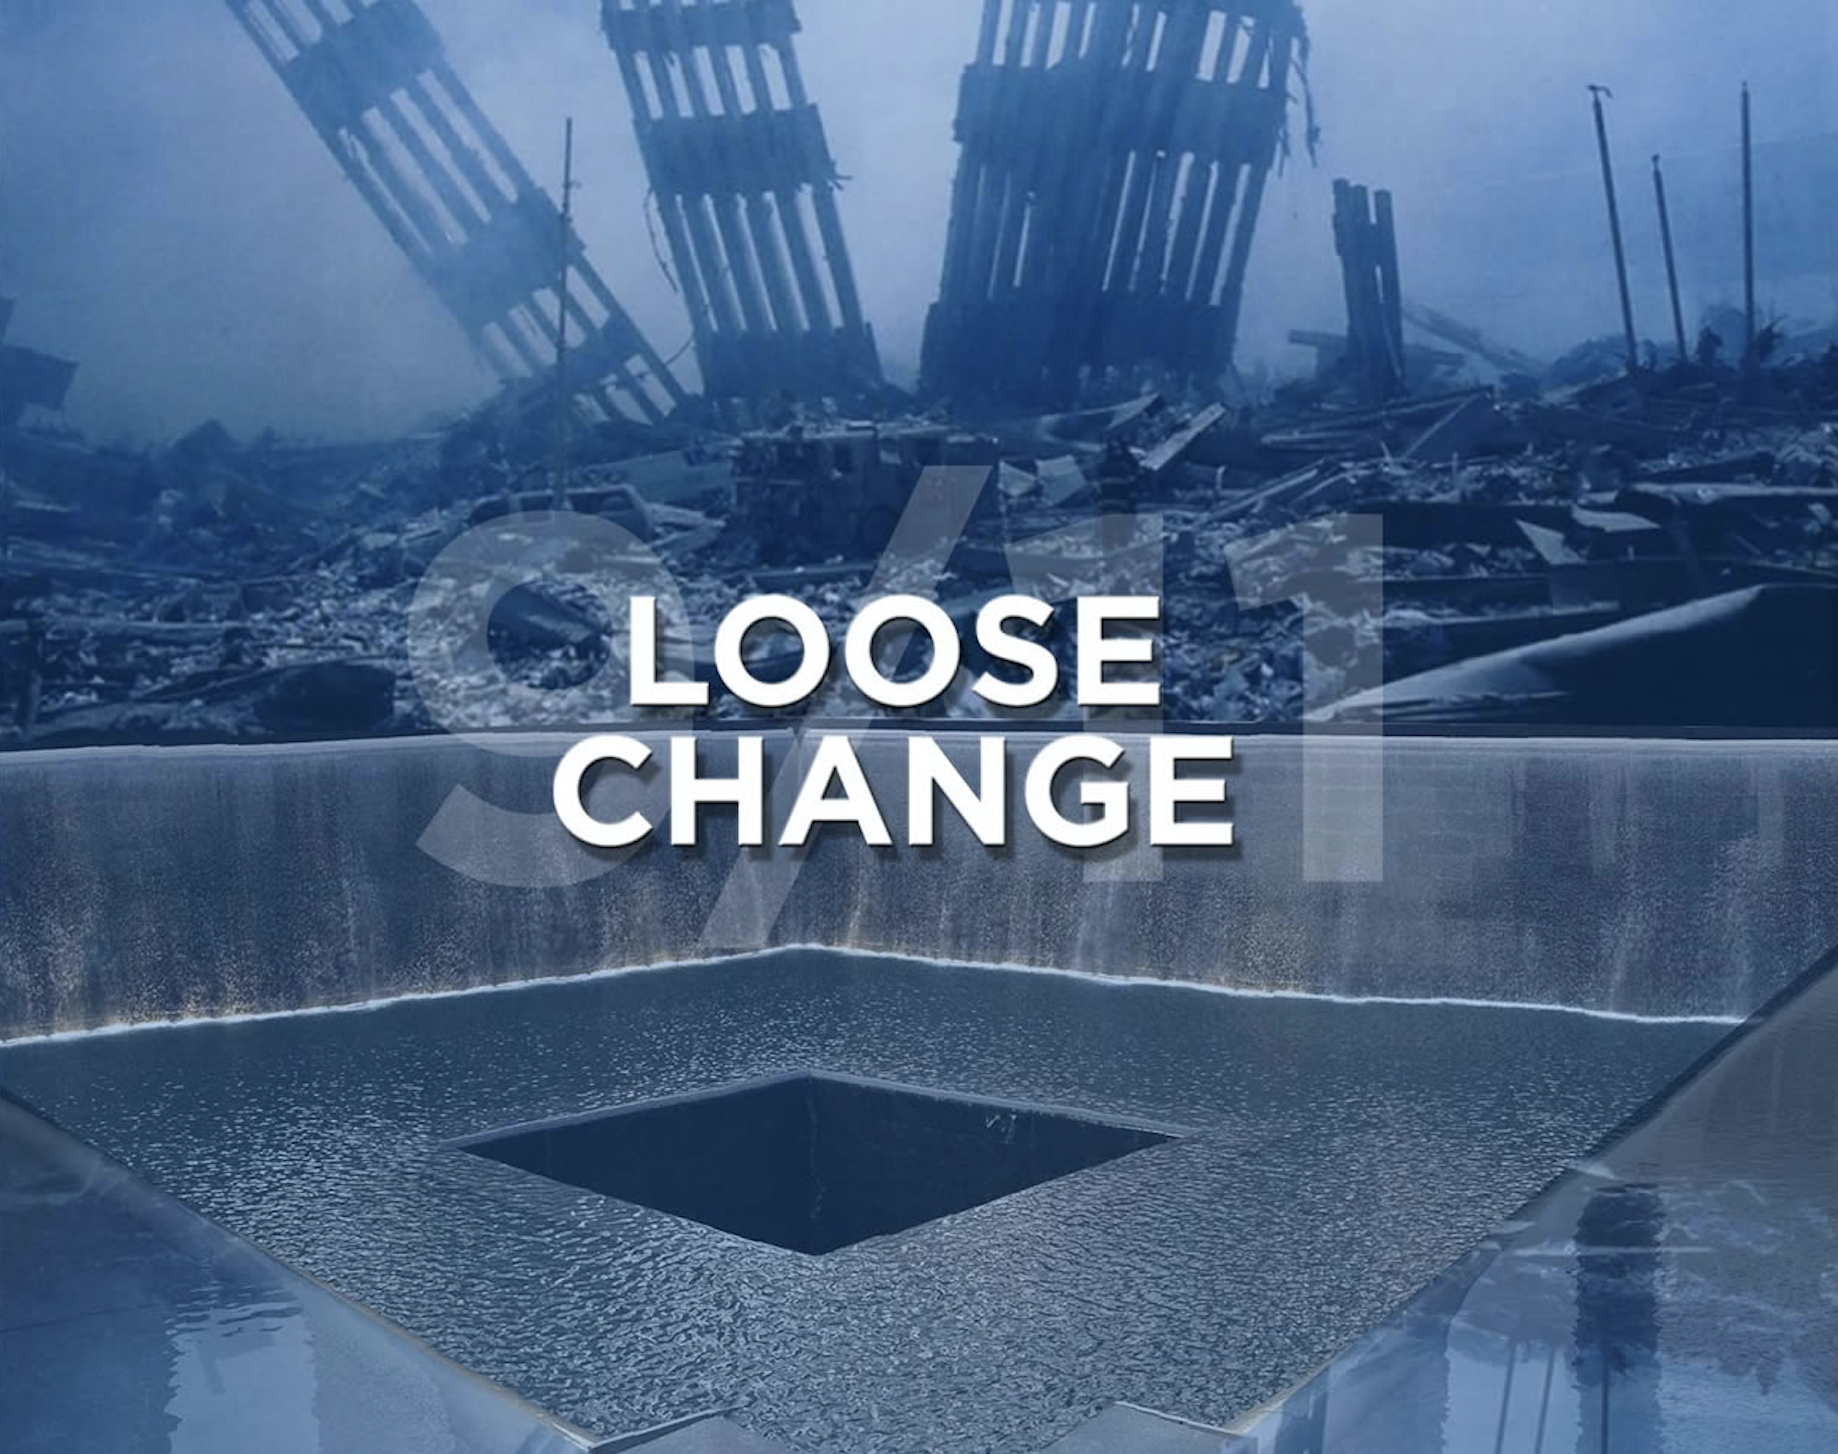 LOOSE CHANGE 9/11